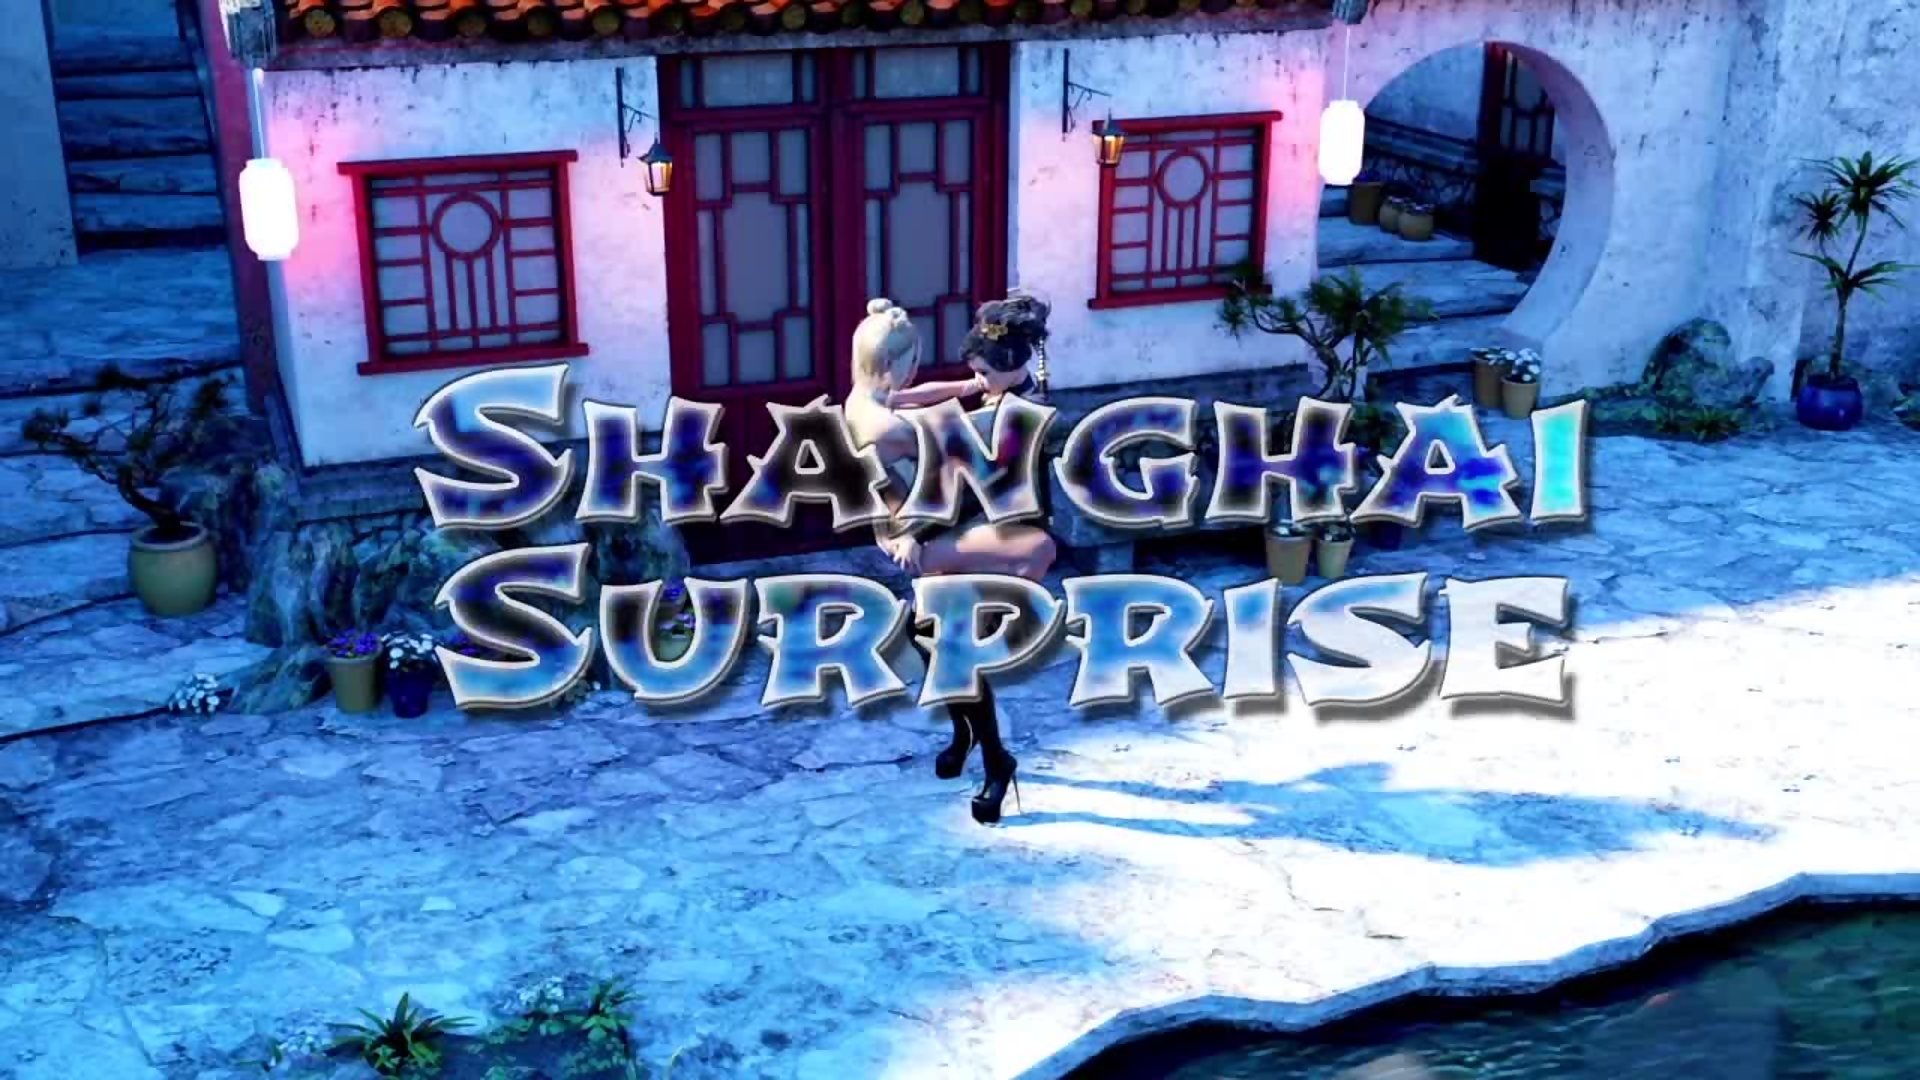 Shanghai Surprise 3D futa animation high quality sample